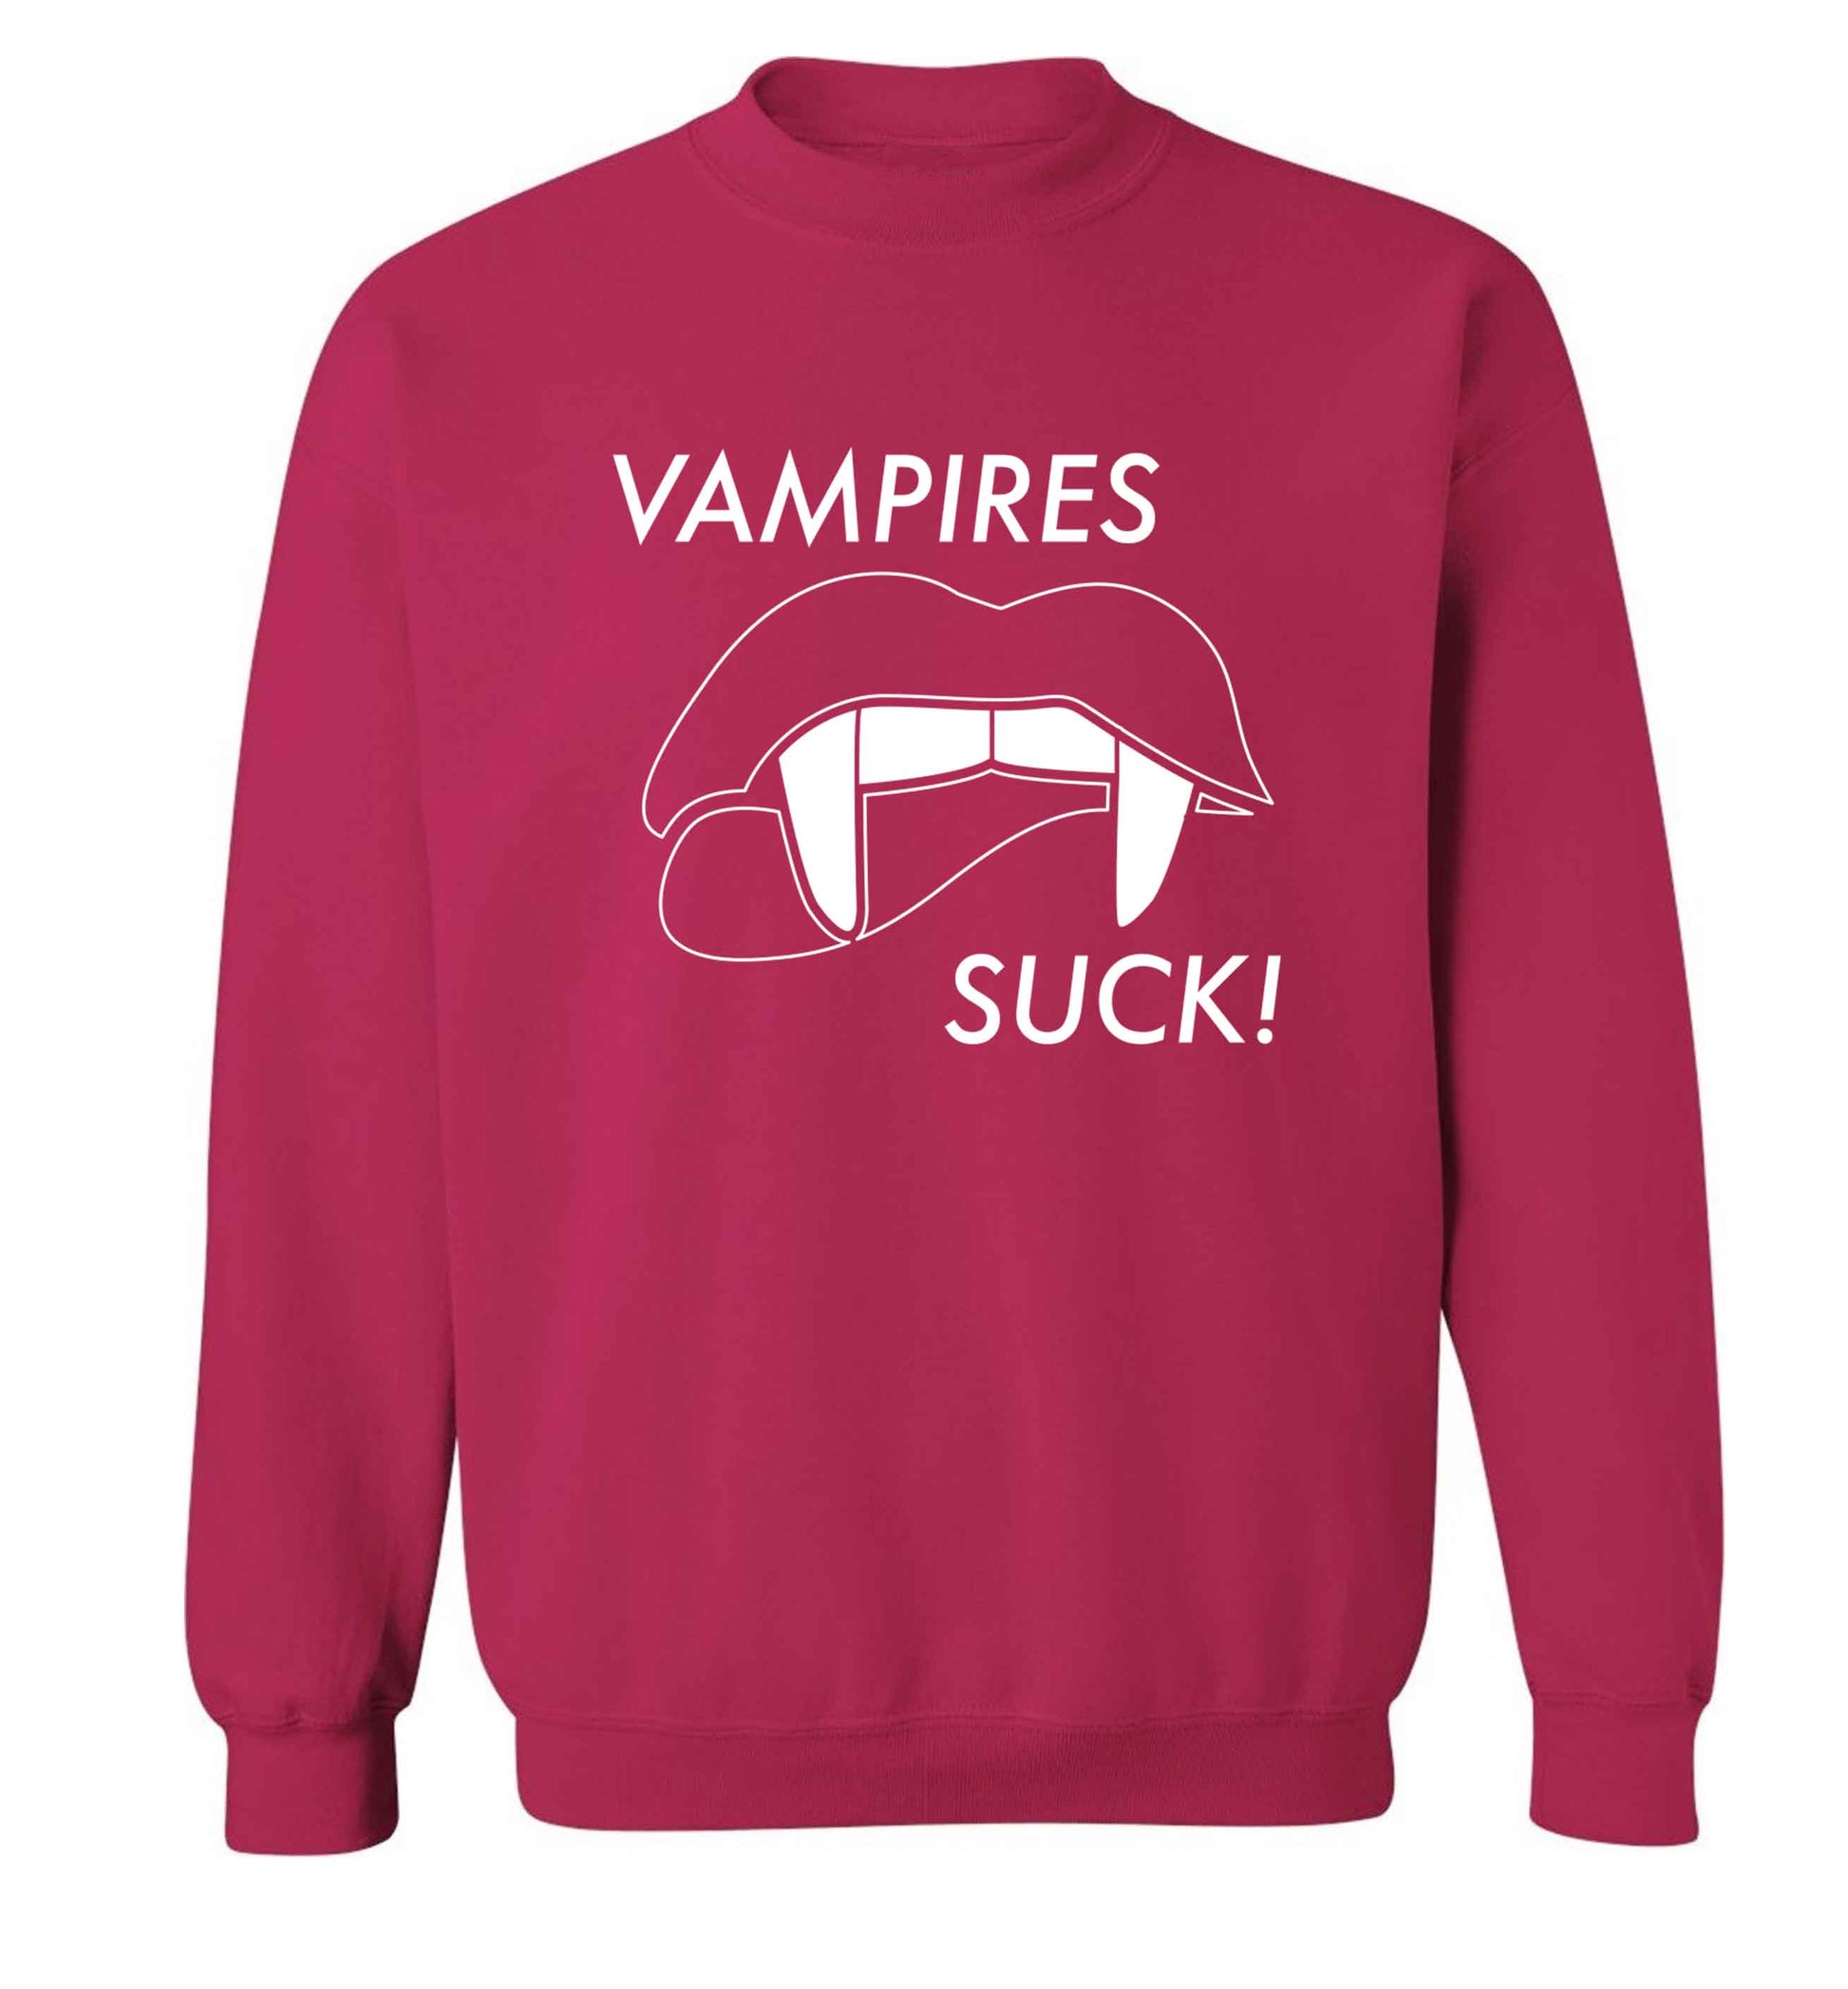 Vampires suck adult's unisex pink sweater 2XL